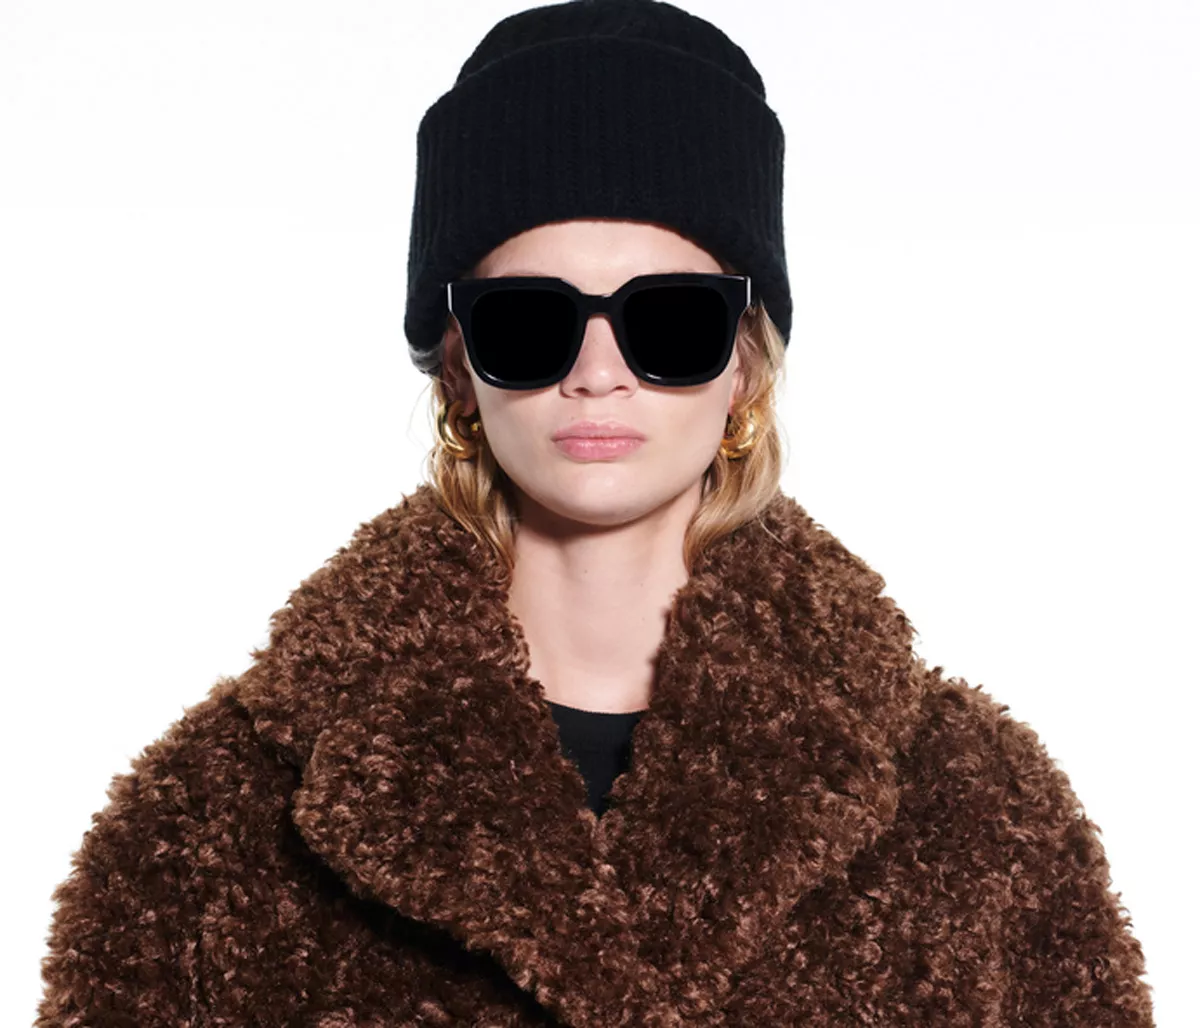 Model trägt braunen Fake-Fur-Mantel aus Teddystoff.